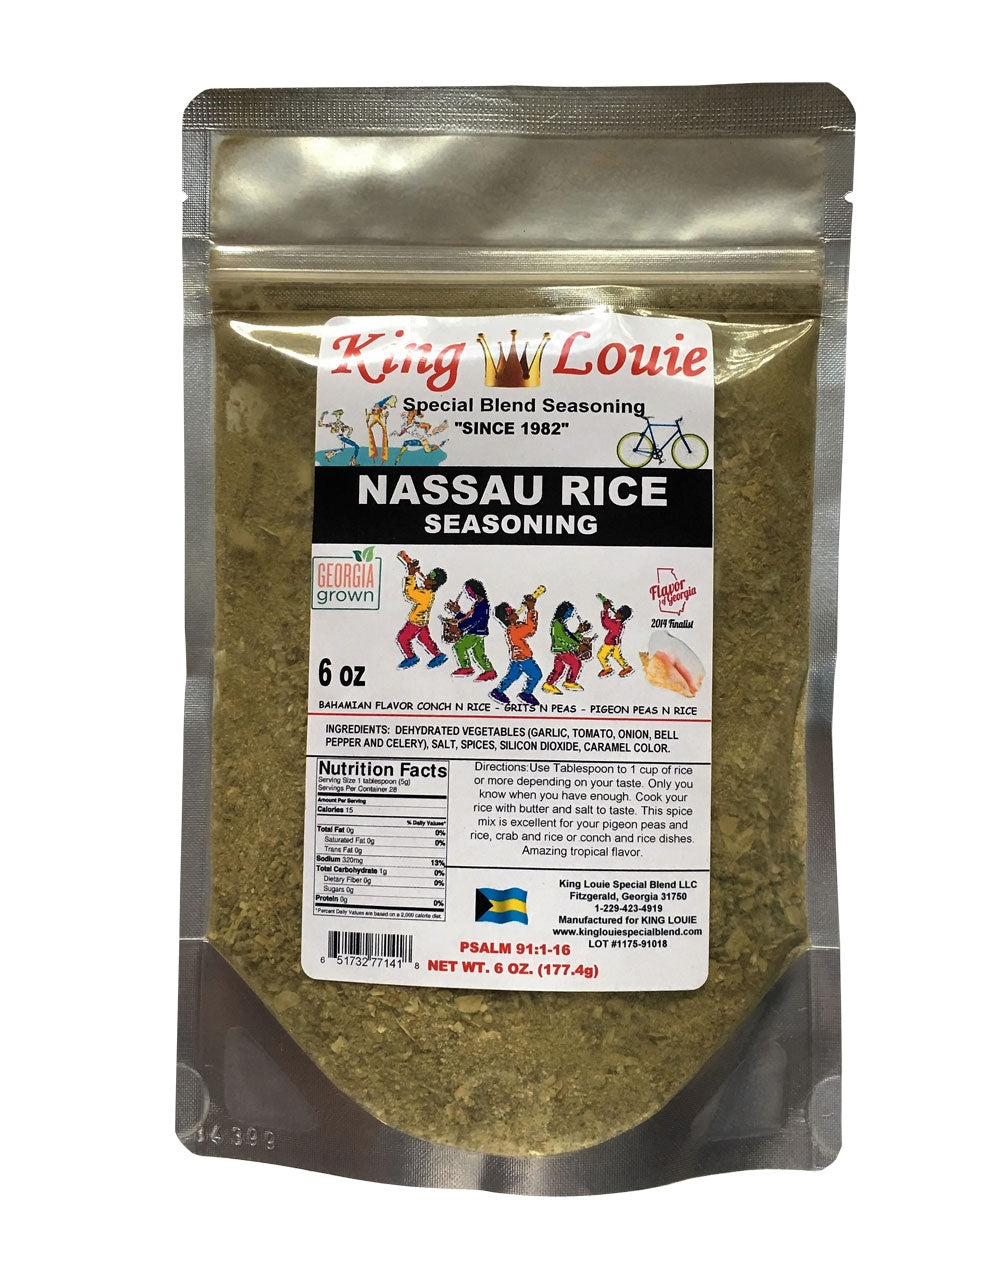 Caribbean Rice Seasoning (Free Gift with Order)